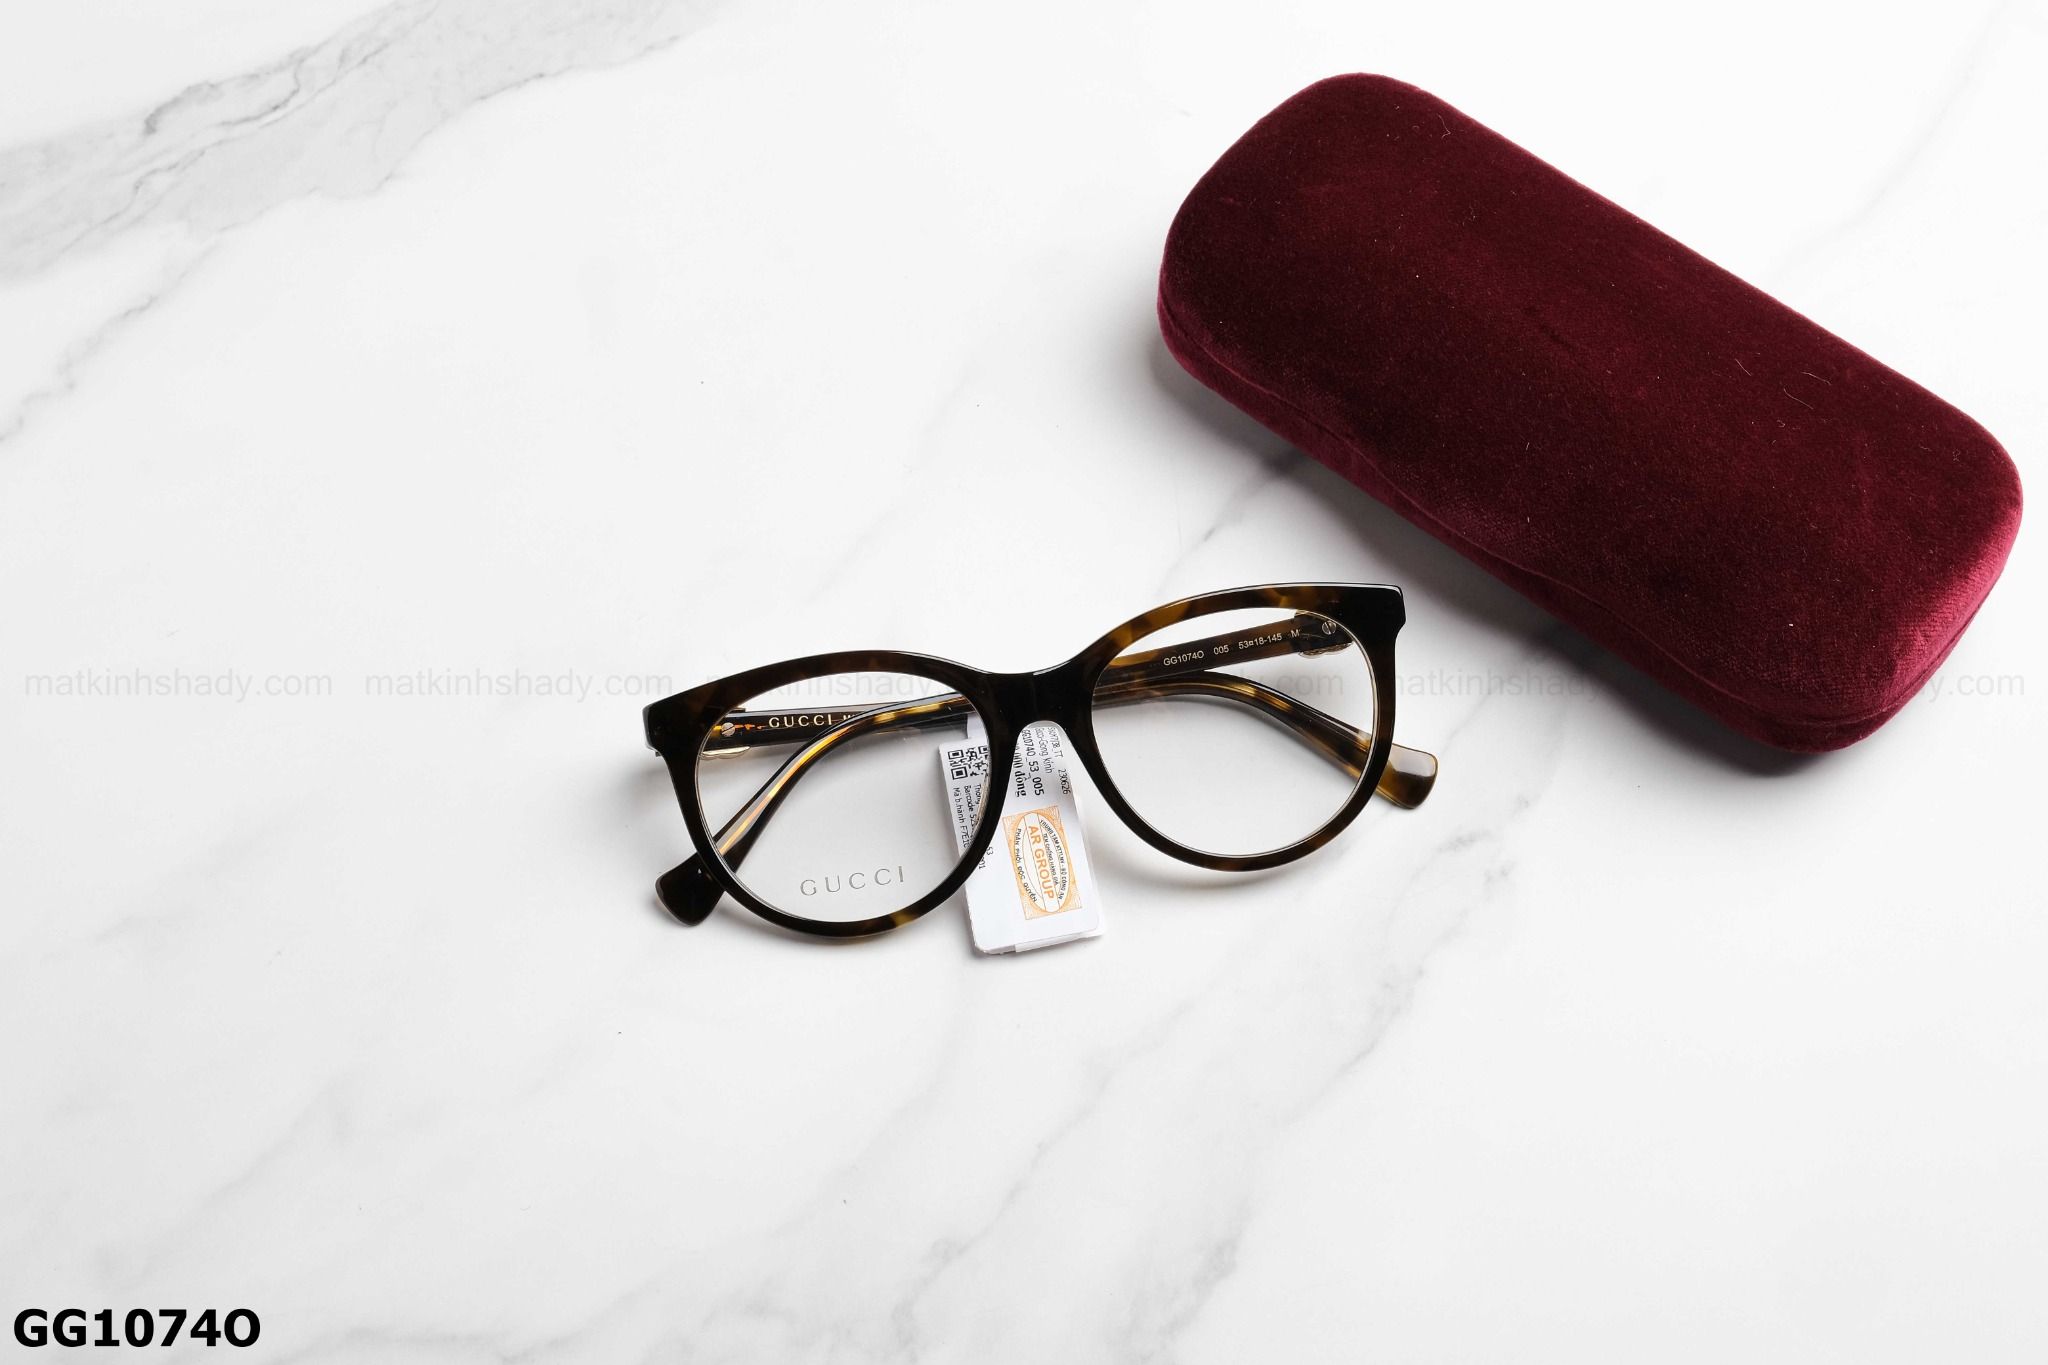  Gucci Eyewear - Glasses - GG1074O 